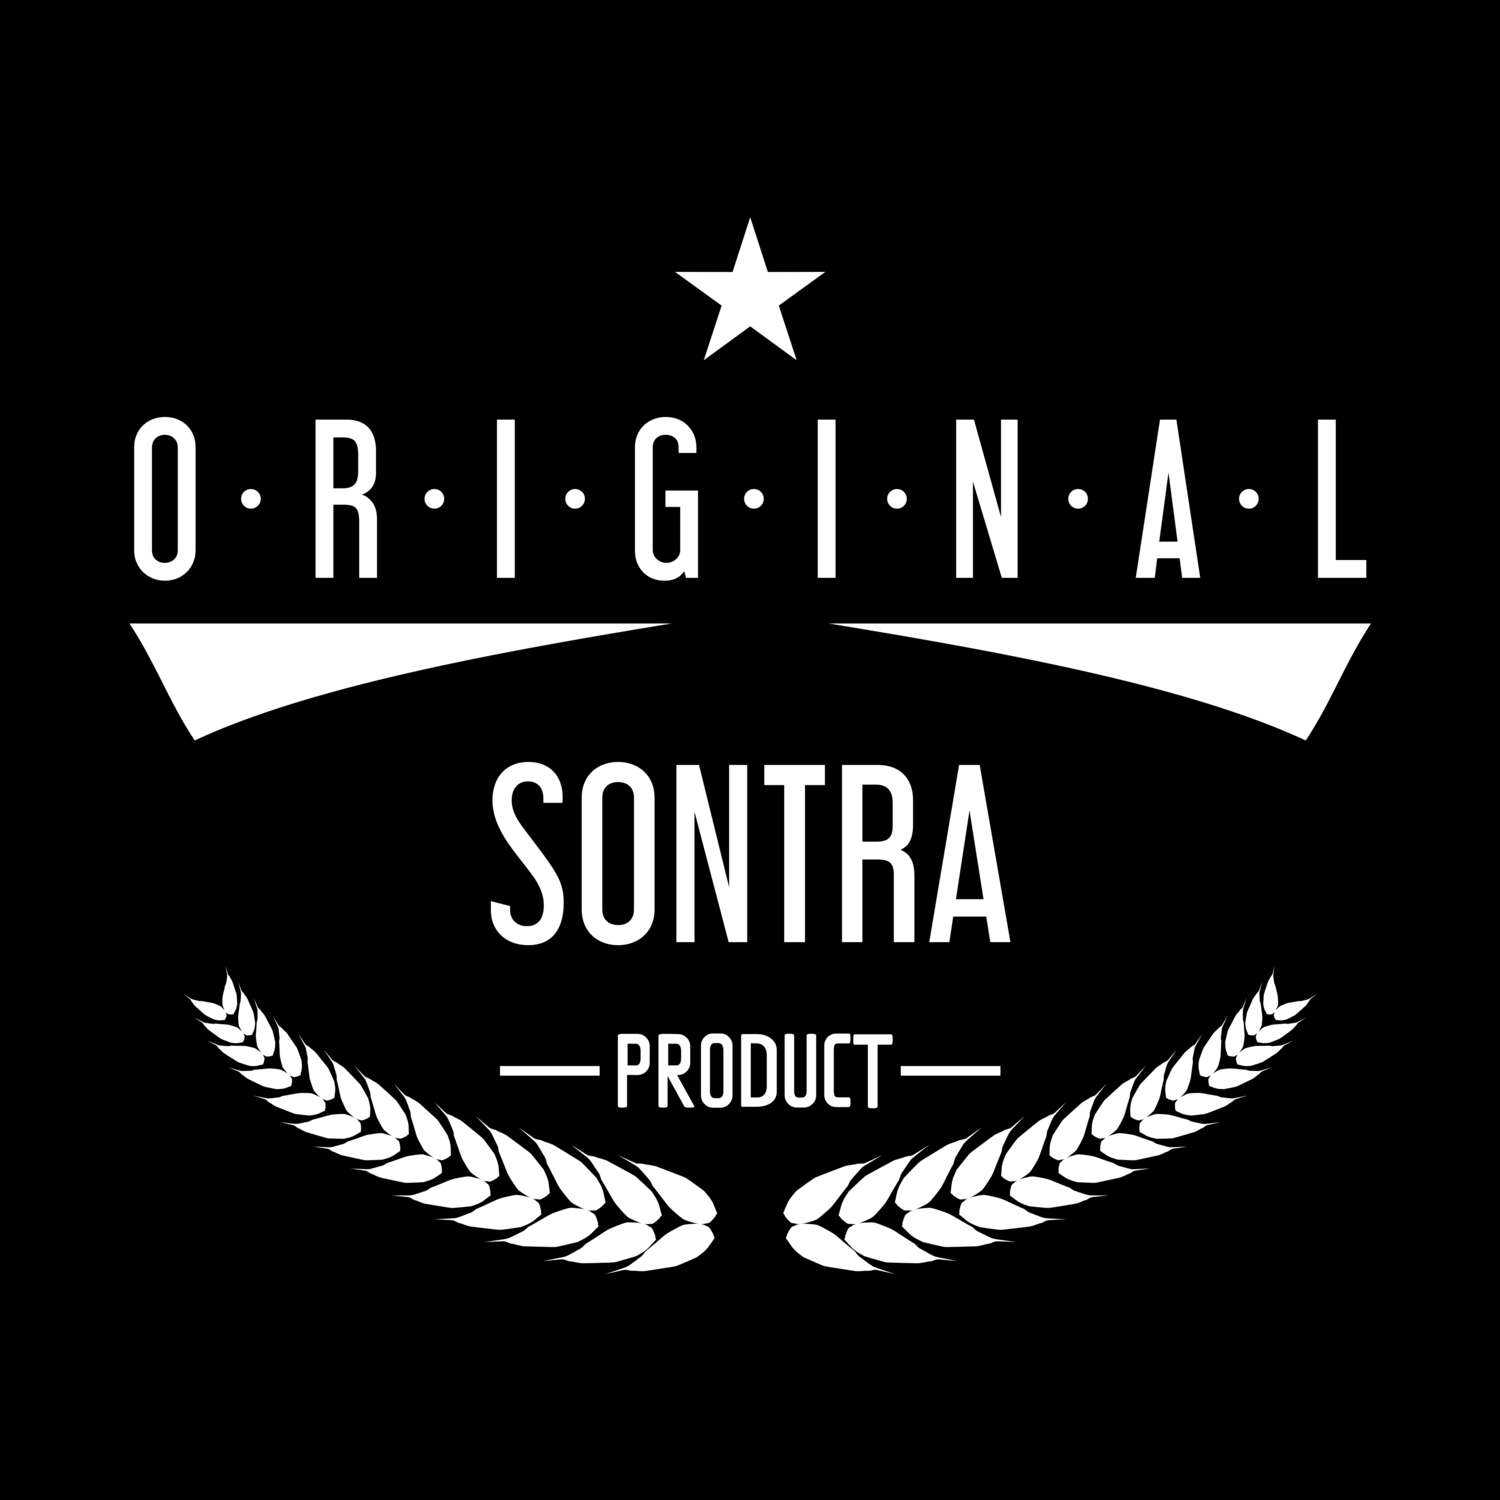 Sontra T-Shirt »Original Product«